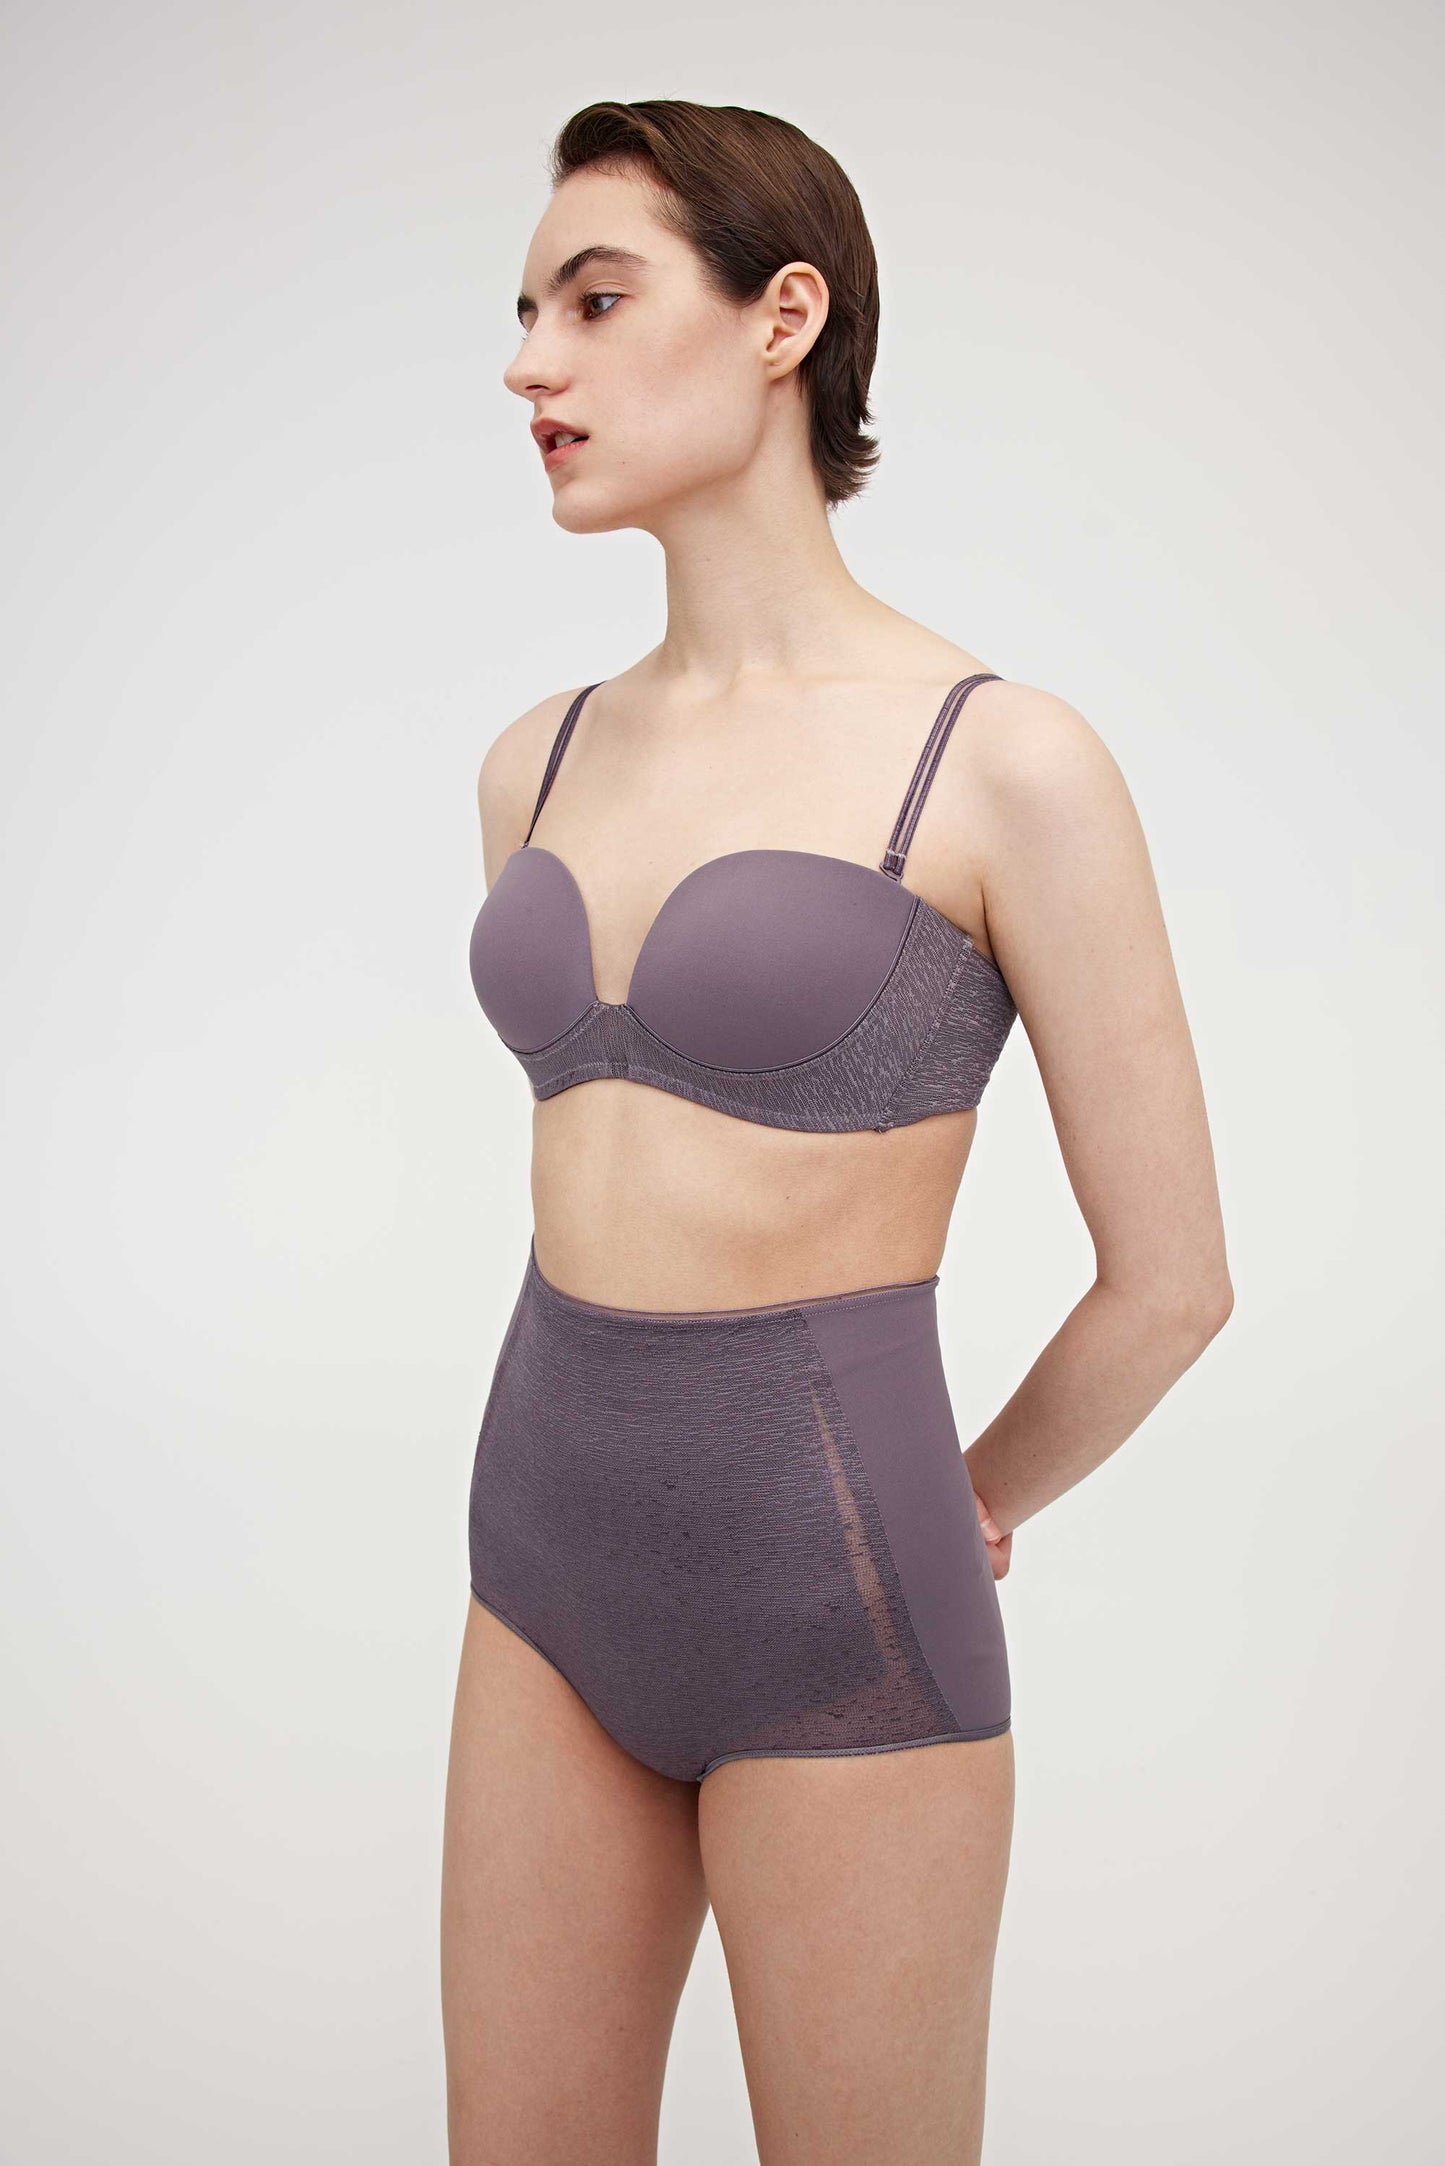 Woman wearing purple bra and high waist brief